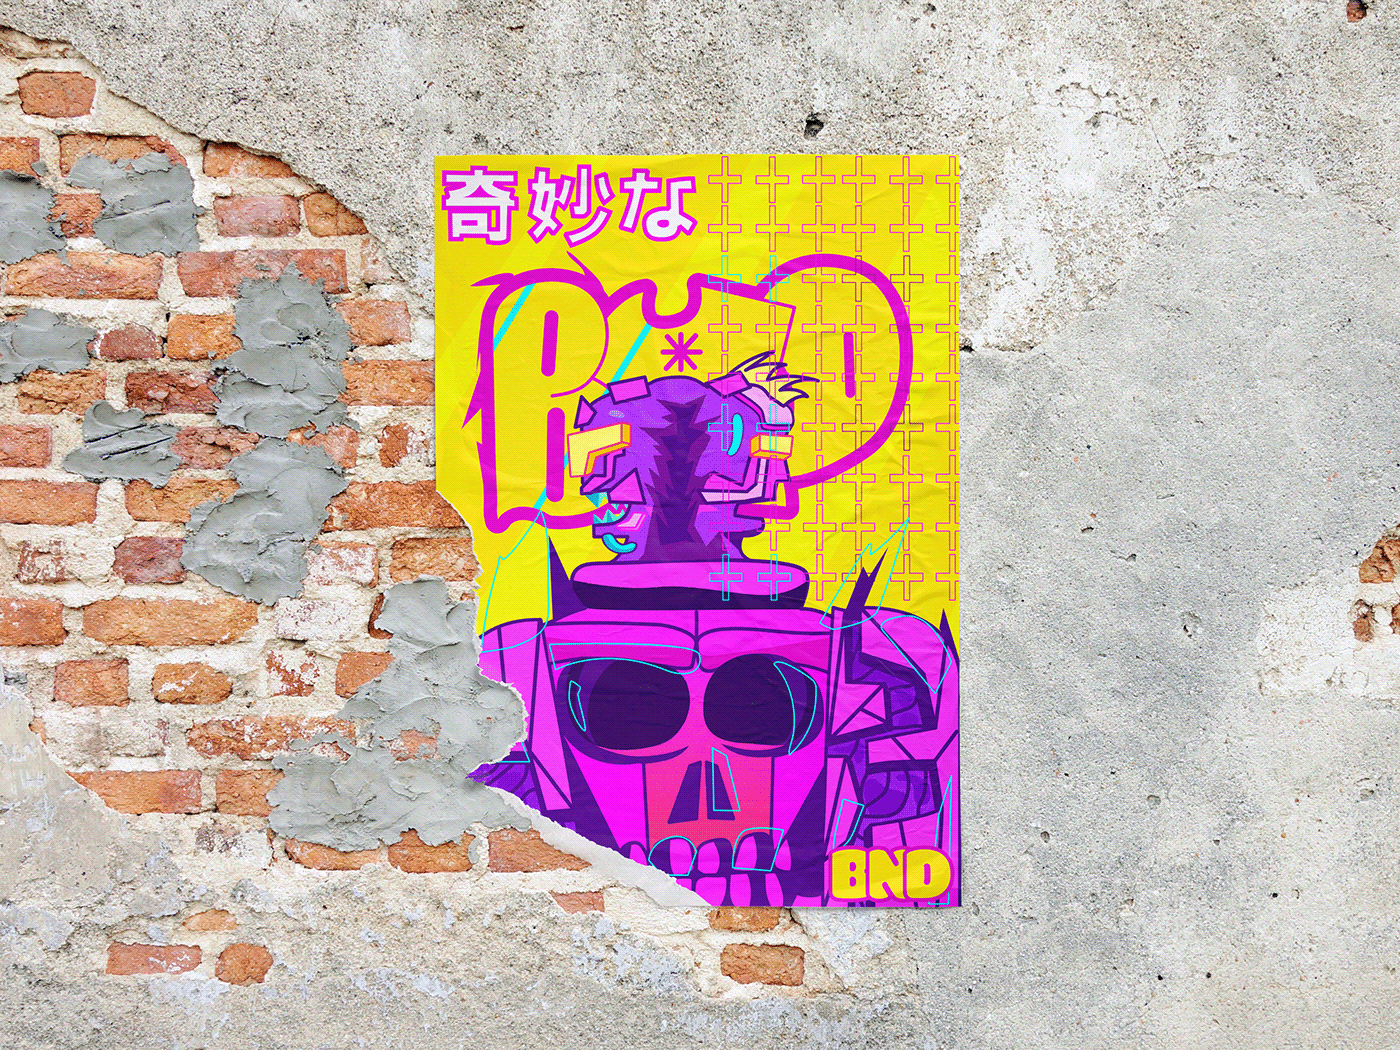 monster vector Cyberpunk affinity designer colorful yellow purple Illustrator detailed